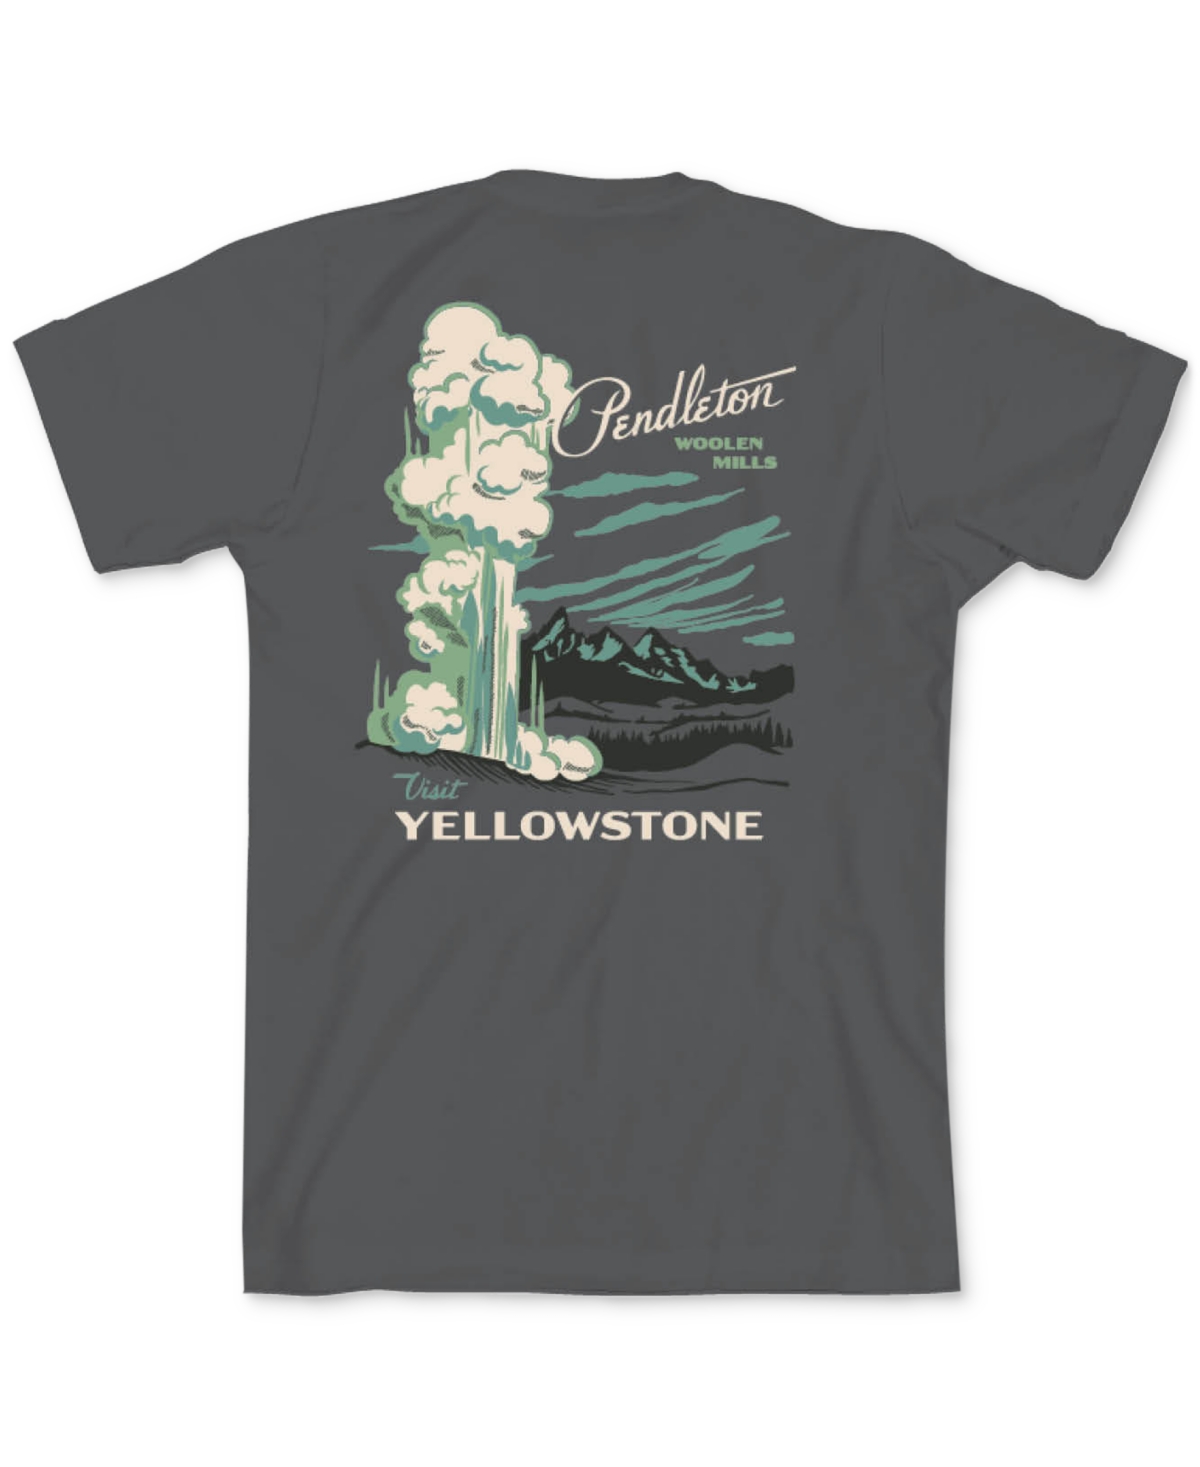 Pendleton Men's Yellowstone Graphic T-shirt In Heavy Metal,green